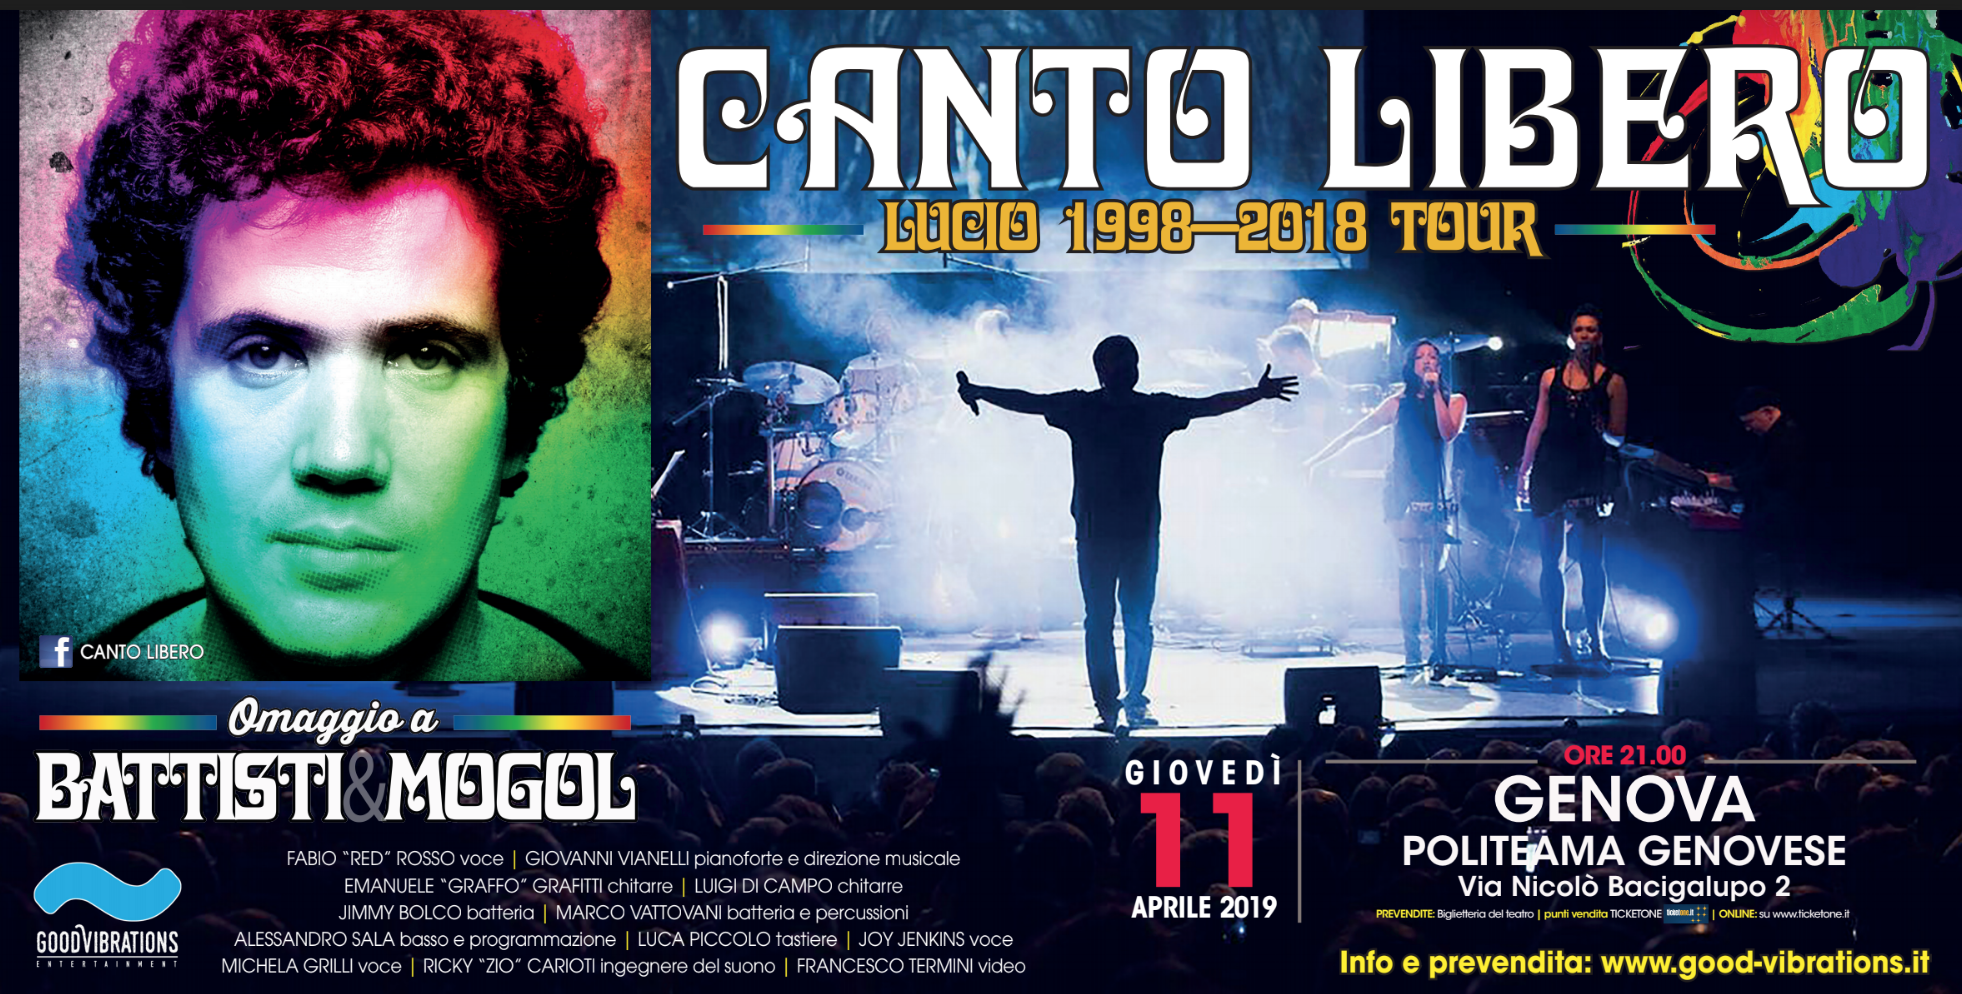 Tearsheets - Canto Libero - 2018 Tour posters